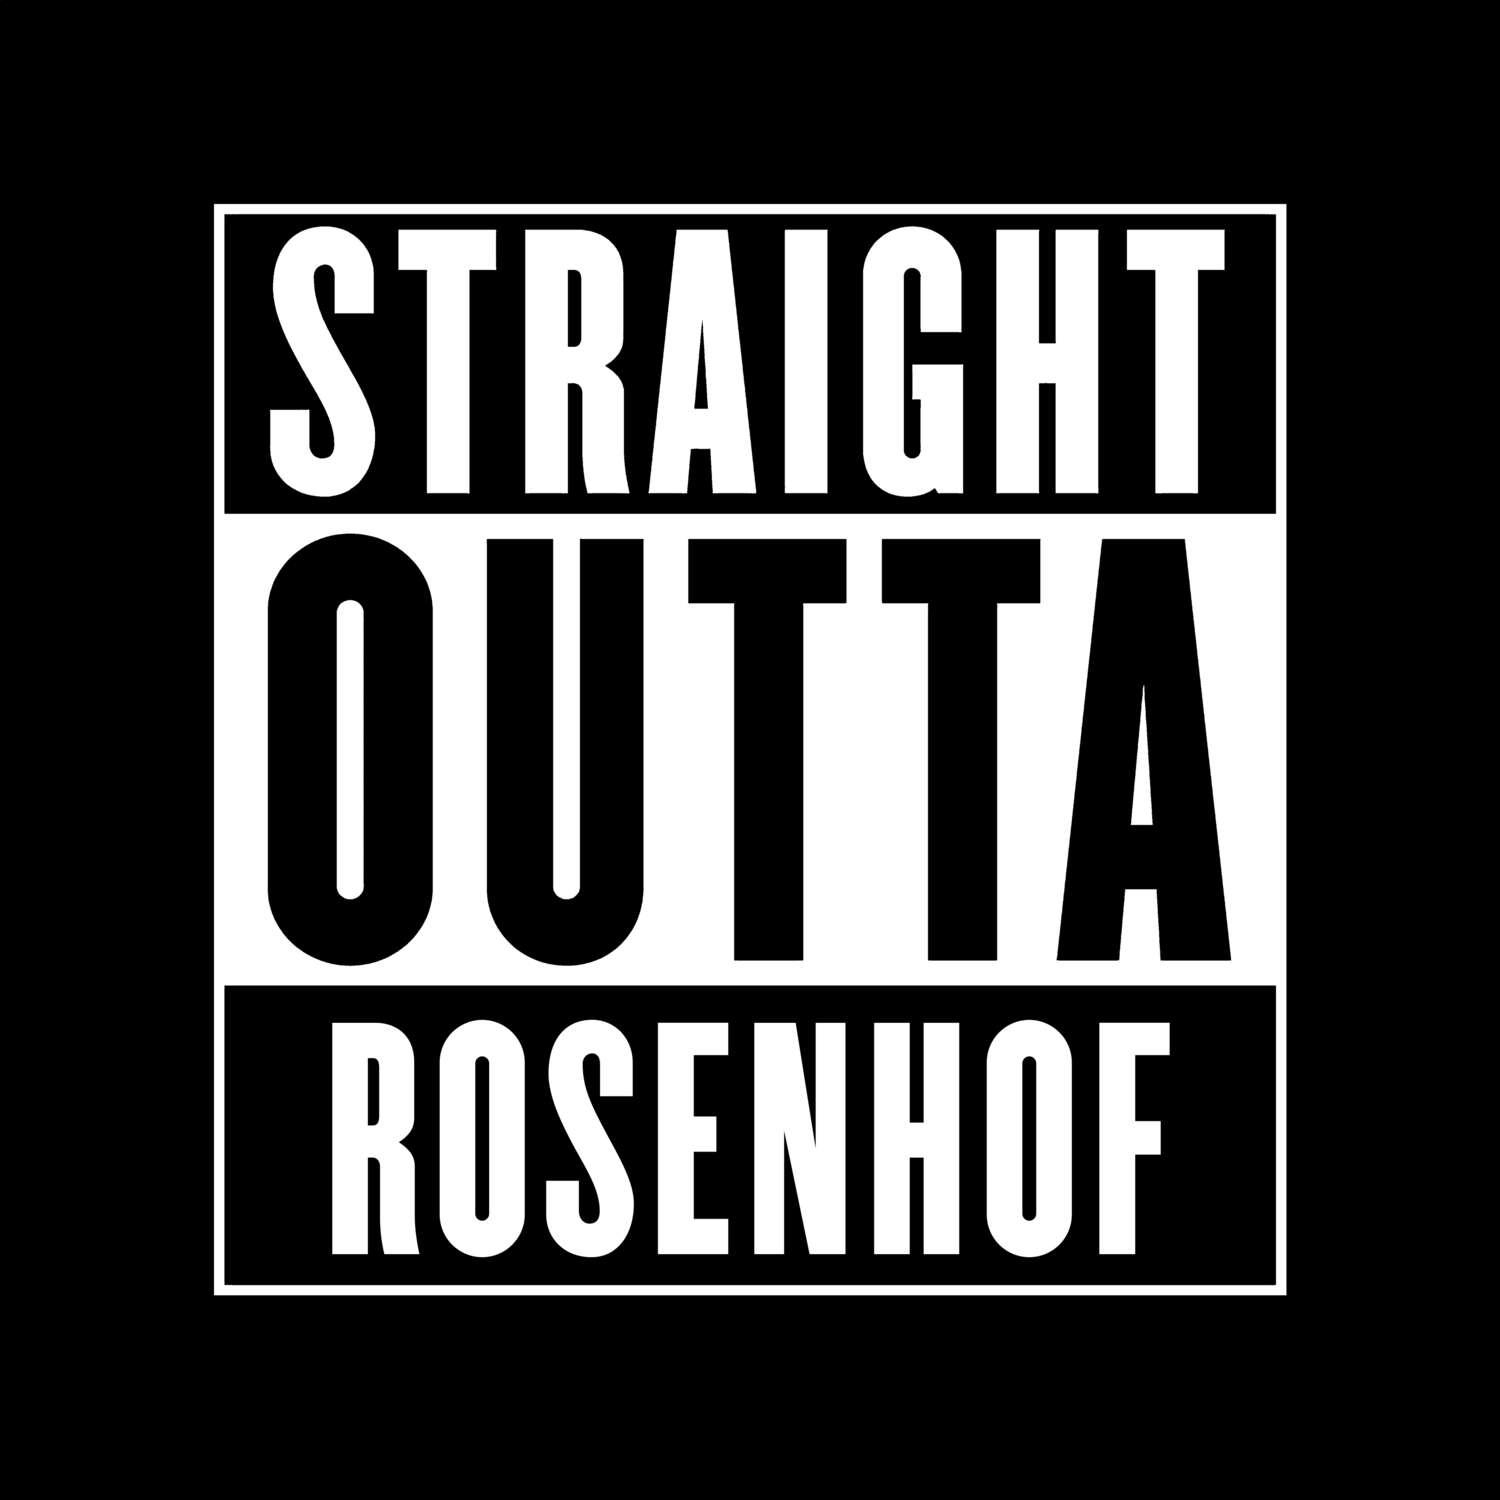 Rosenhof T-Shirt »Straight Outta«